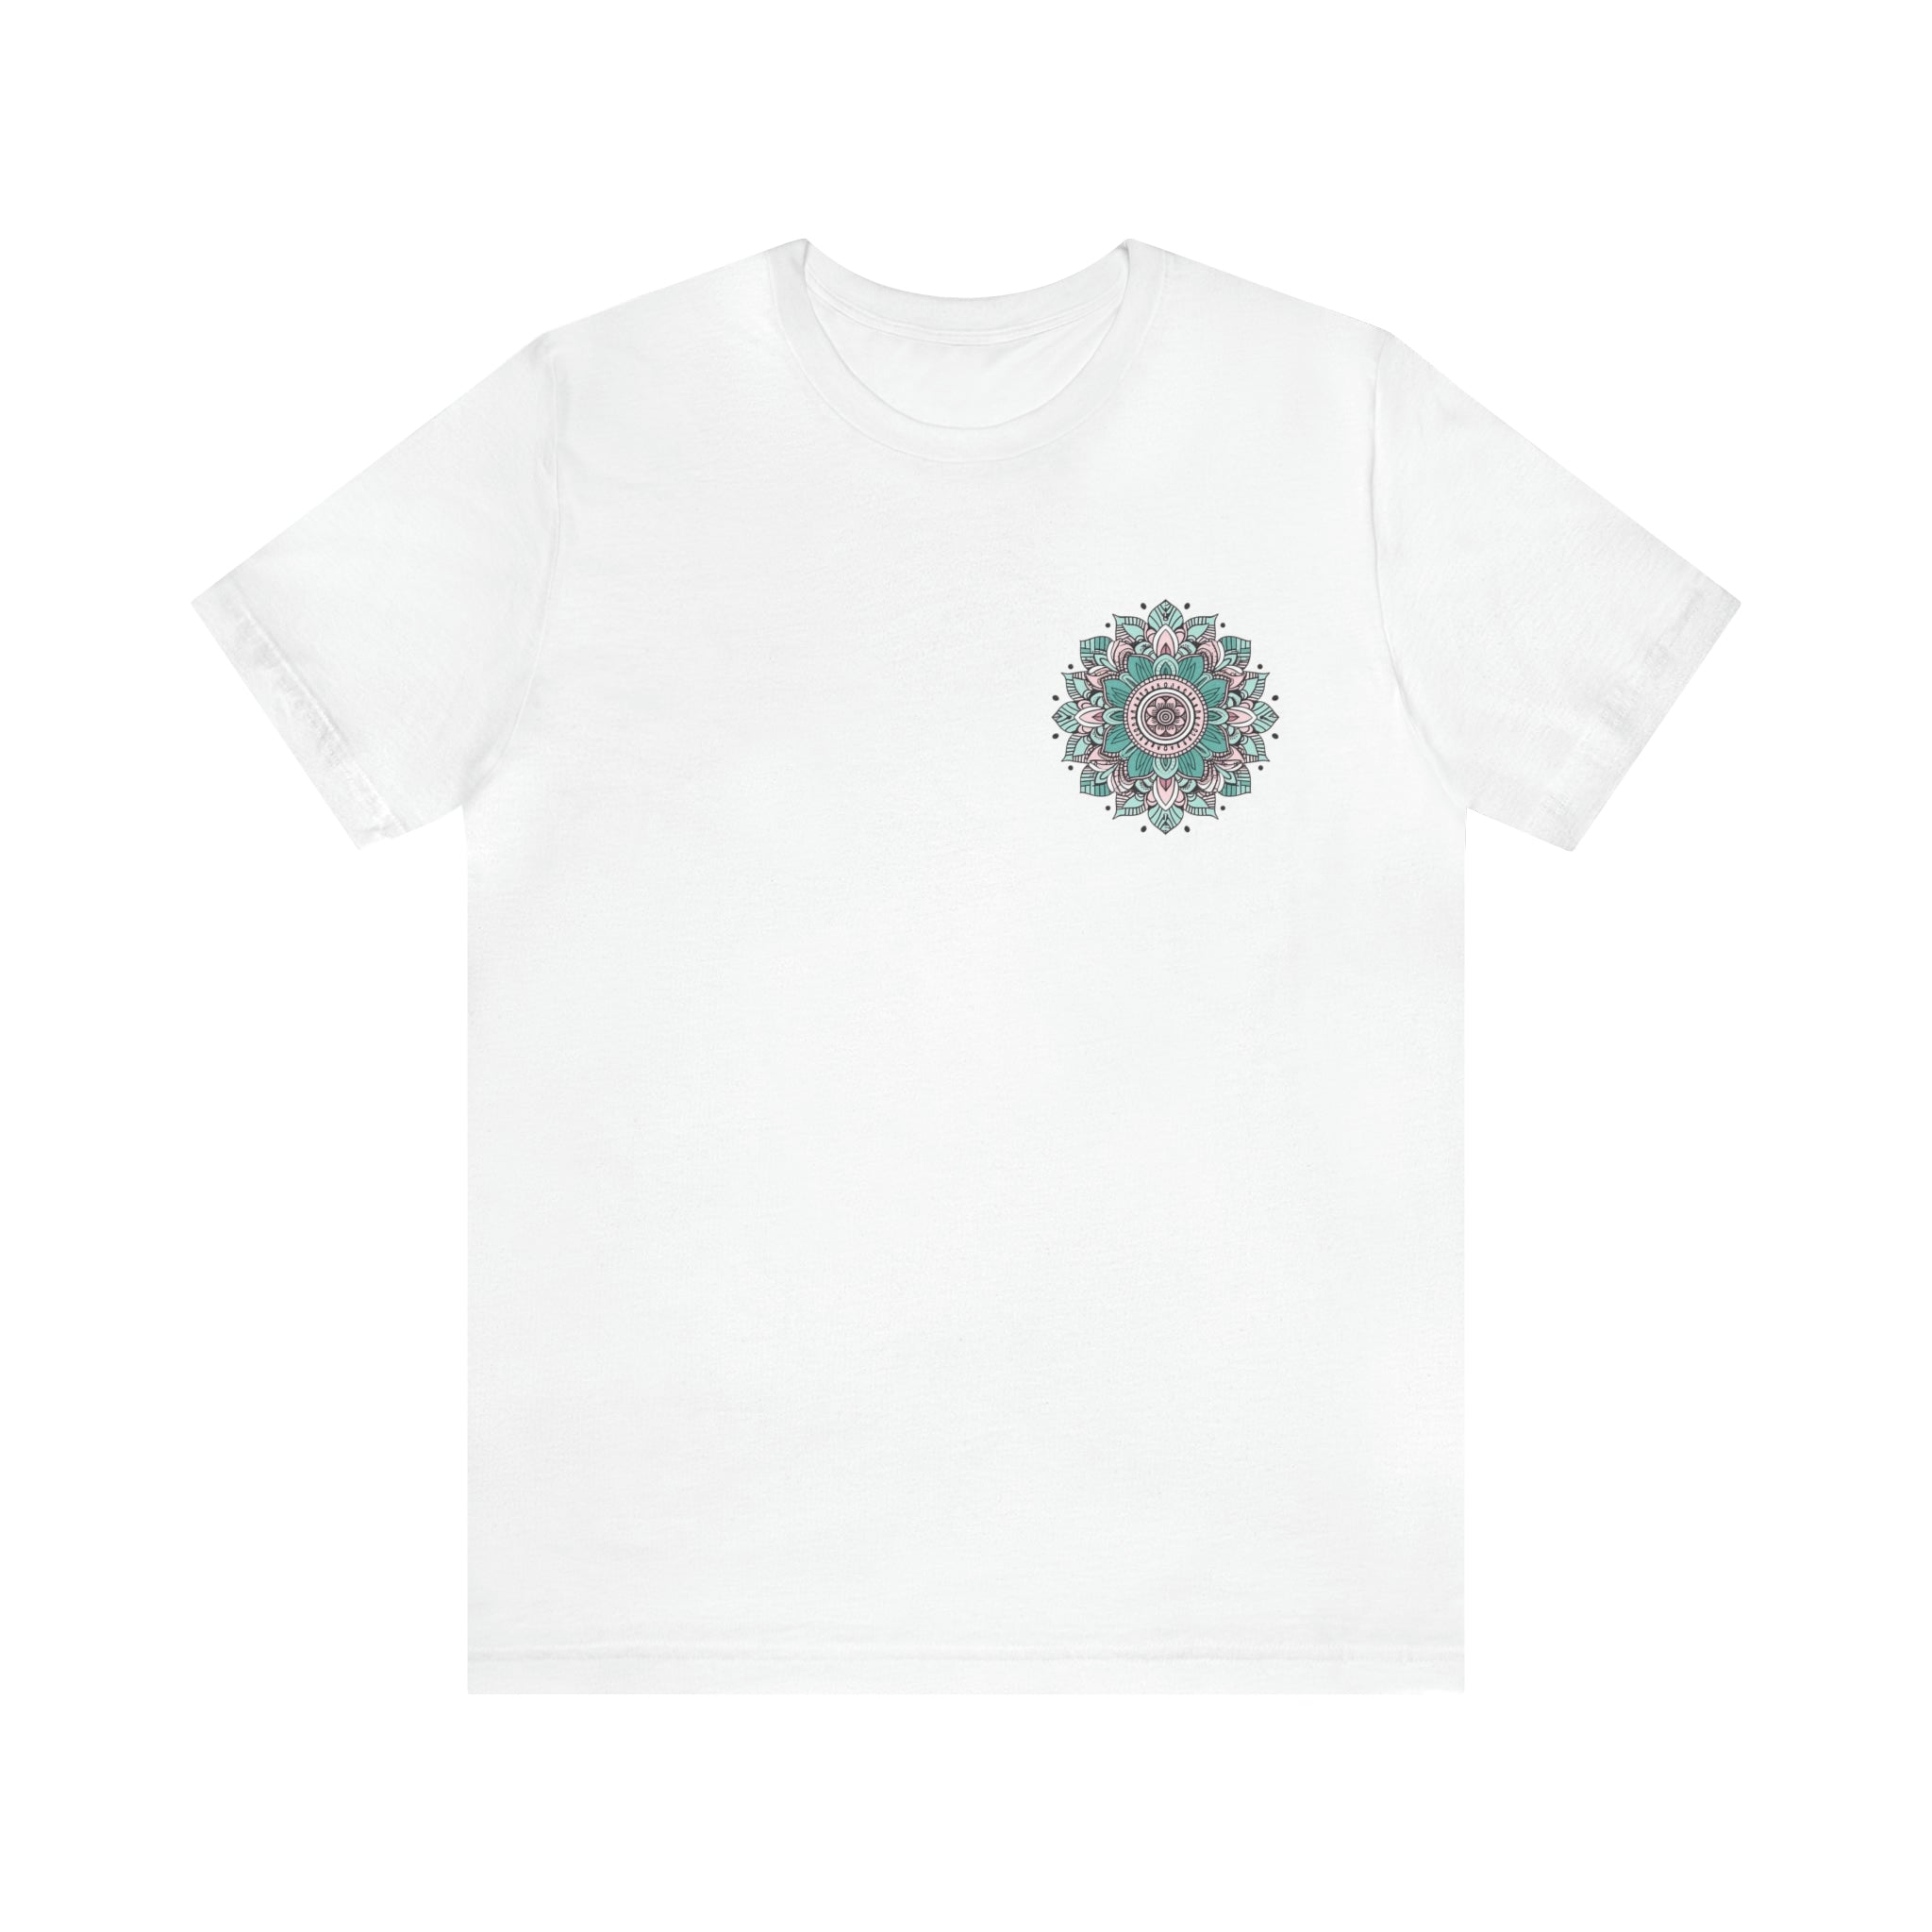 Tranquility Unisex Cotton T-Shirt